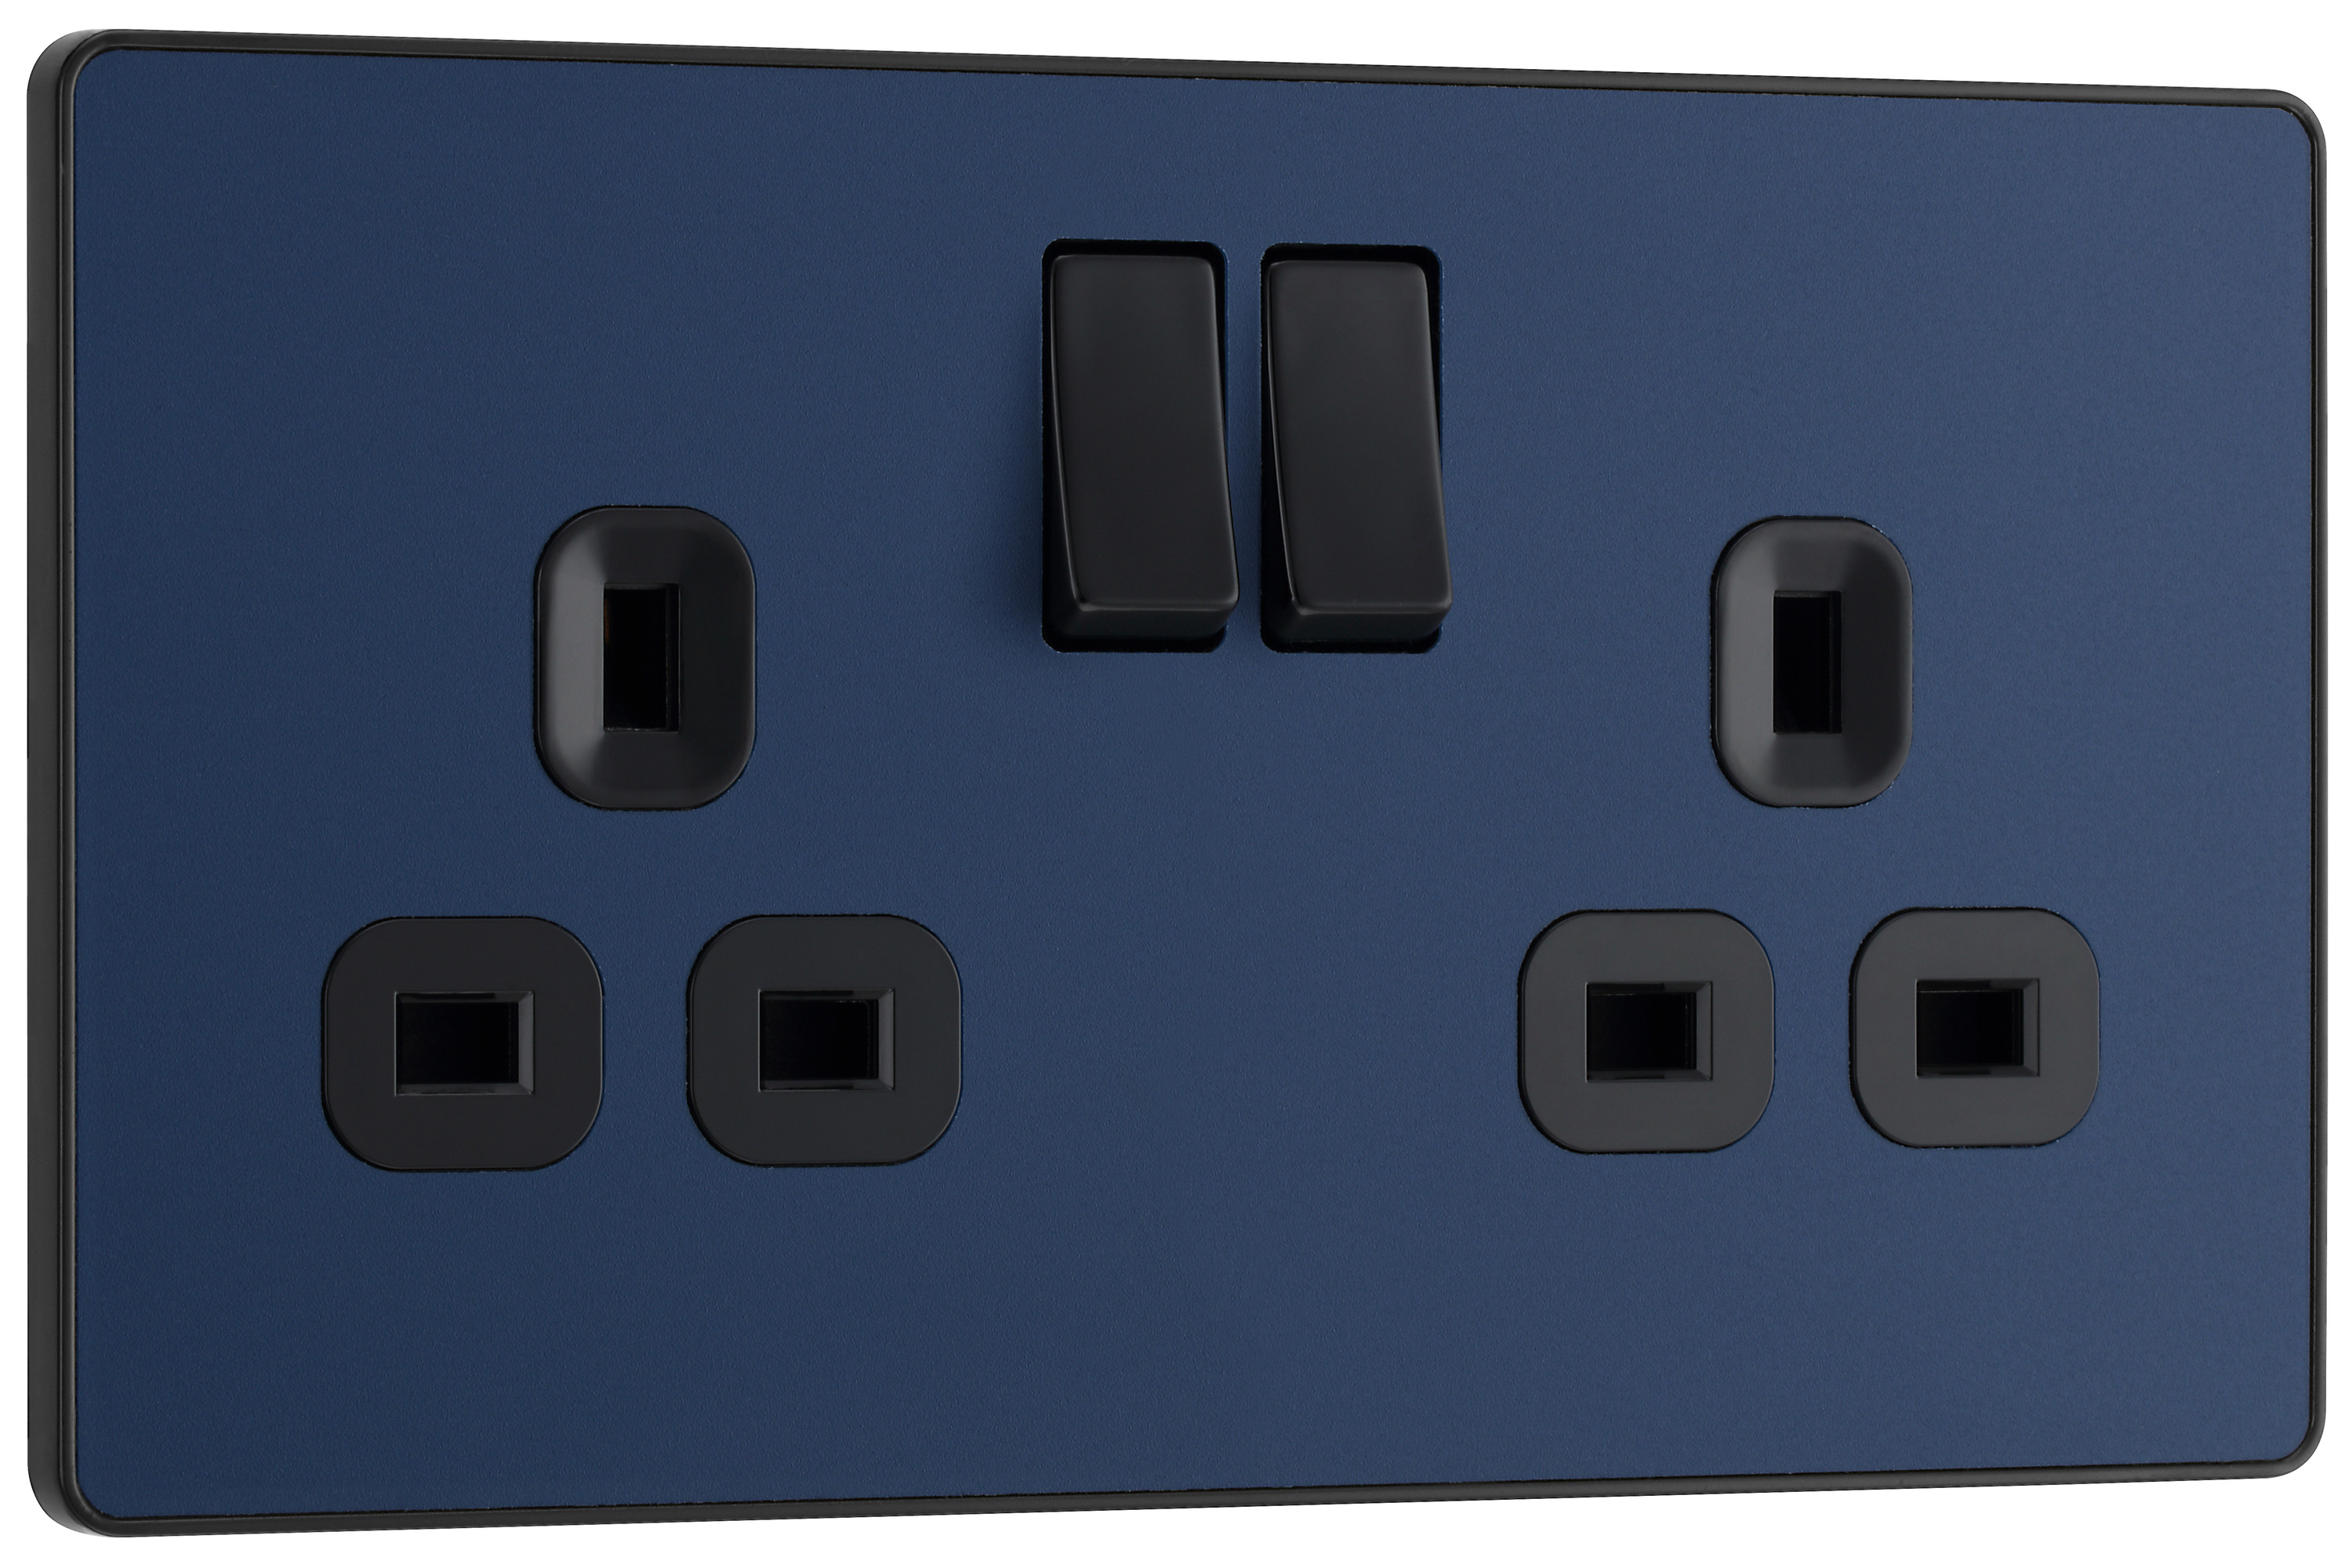 BG Evolve Matt Blue 13A Double Switched Power Socket